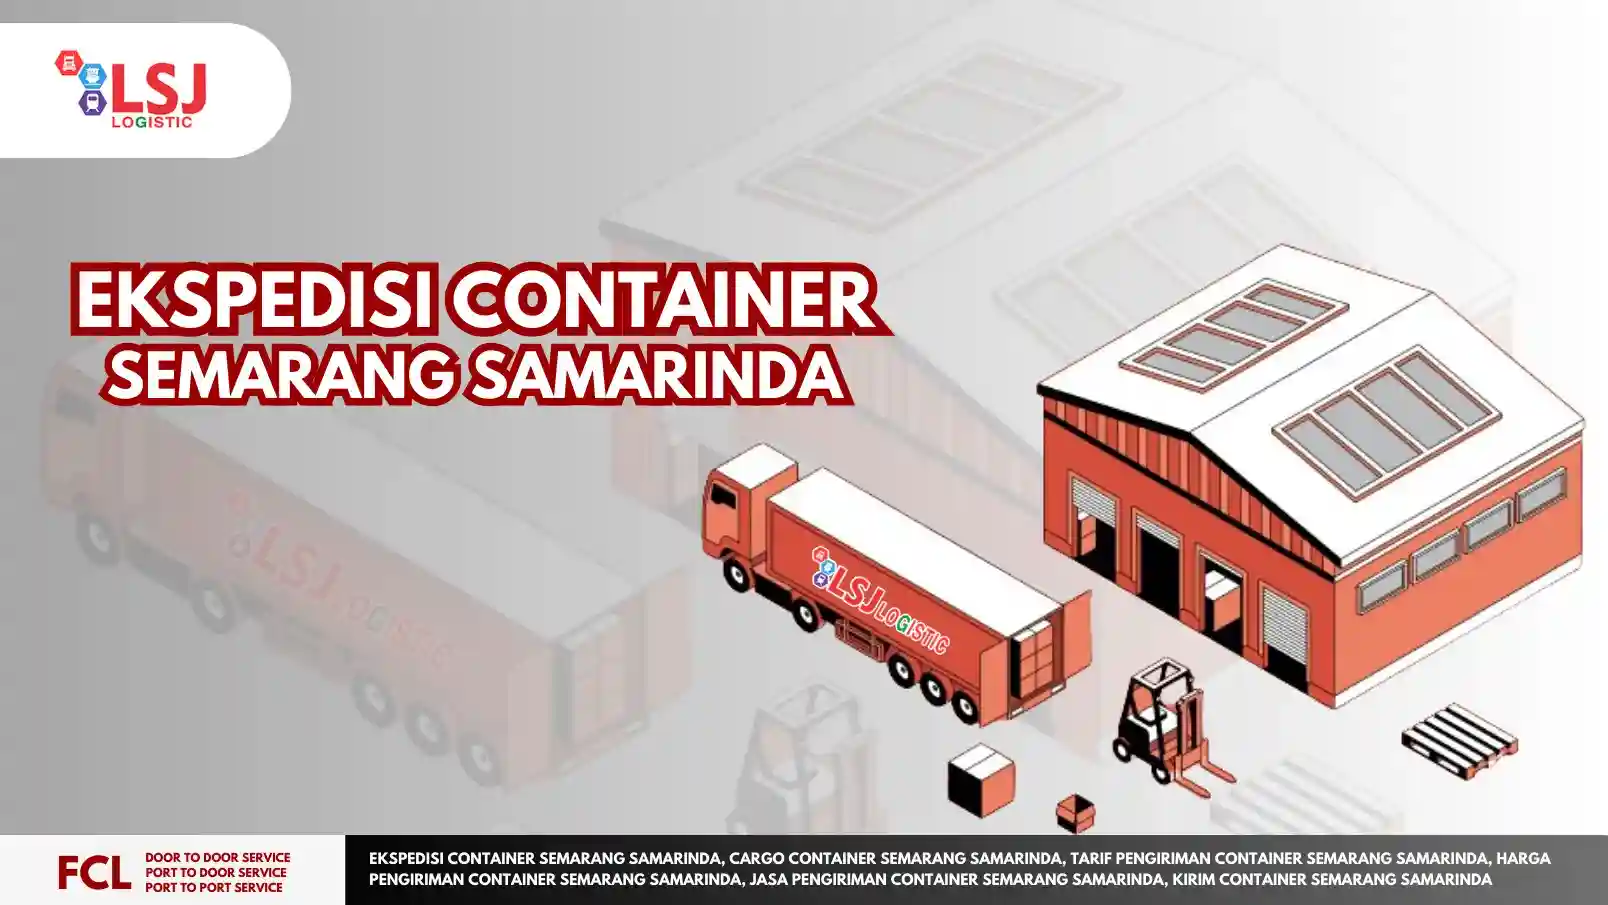 Ekspedisi Container Semarang Samarinda